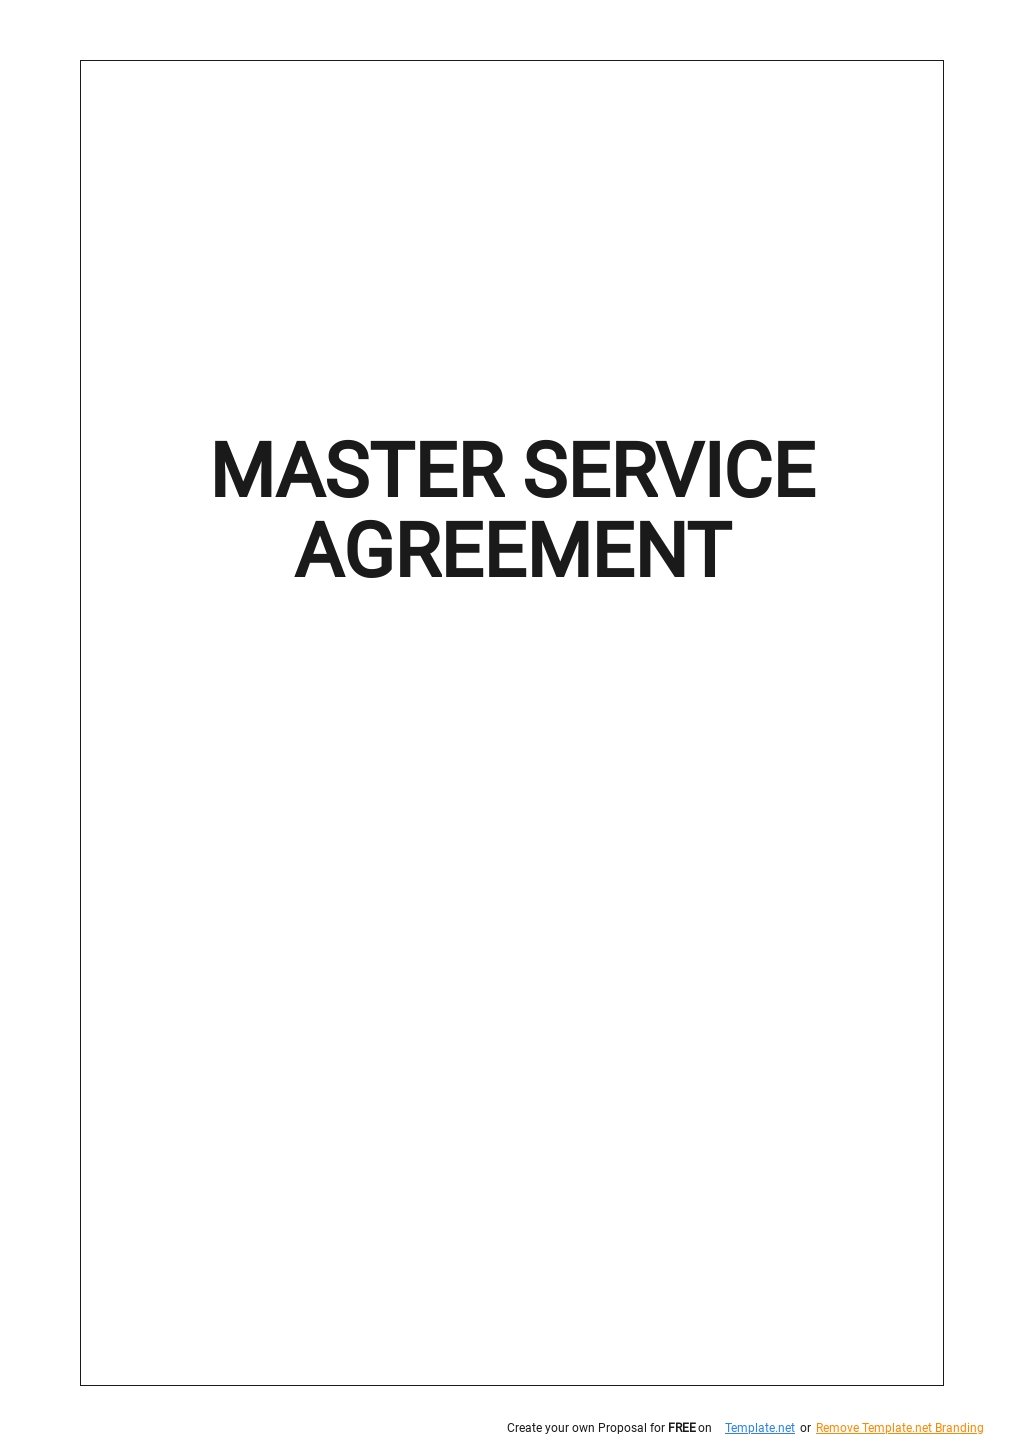 Simple Master Service Agreement Template.jpe